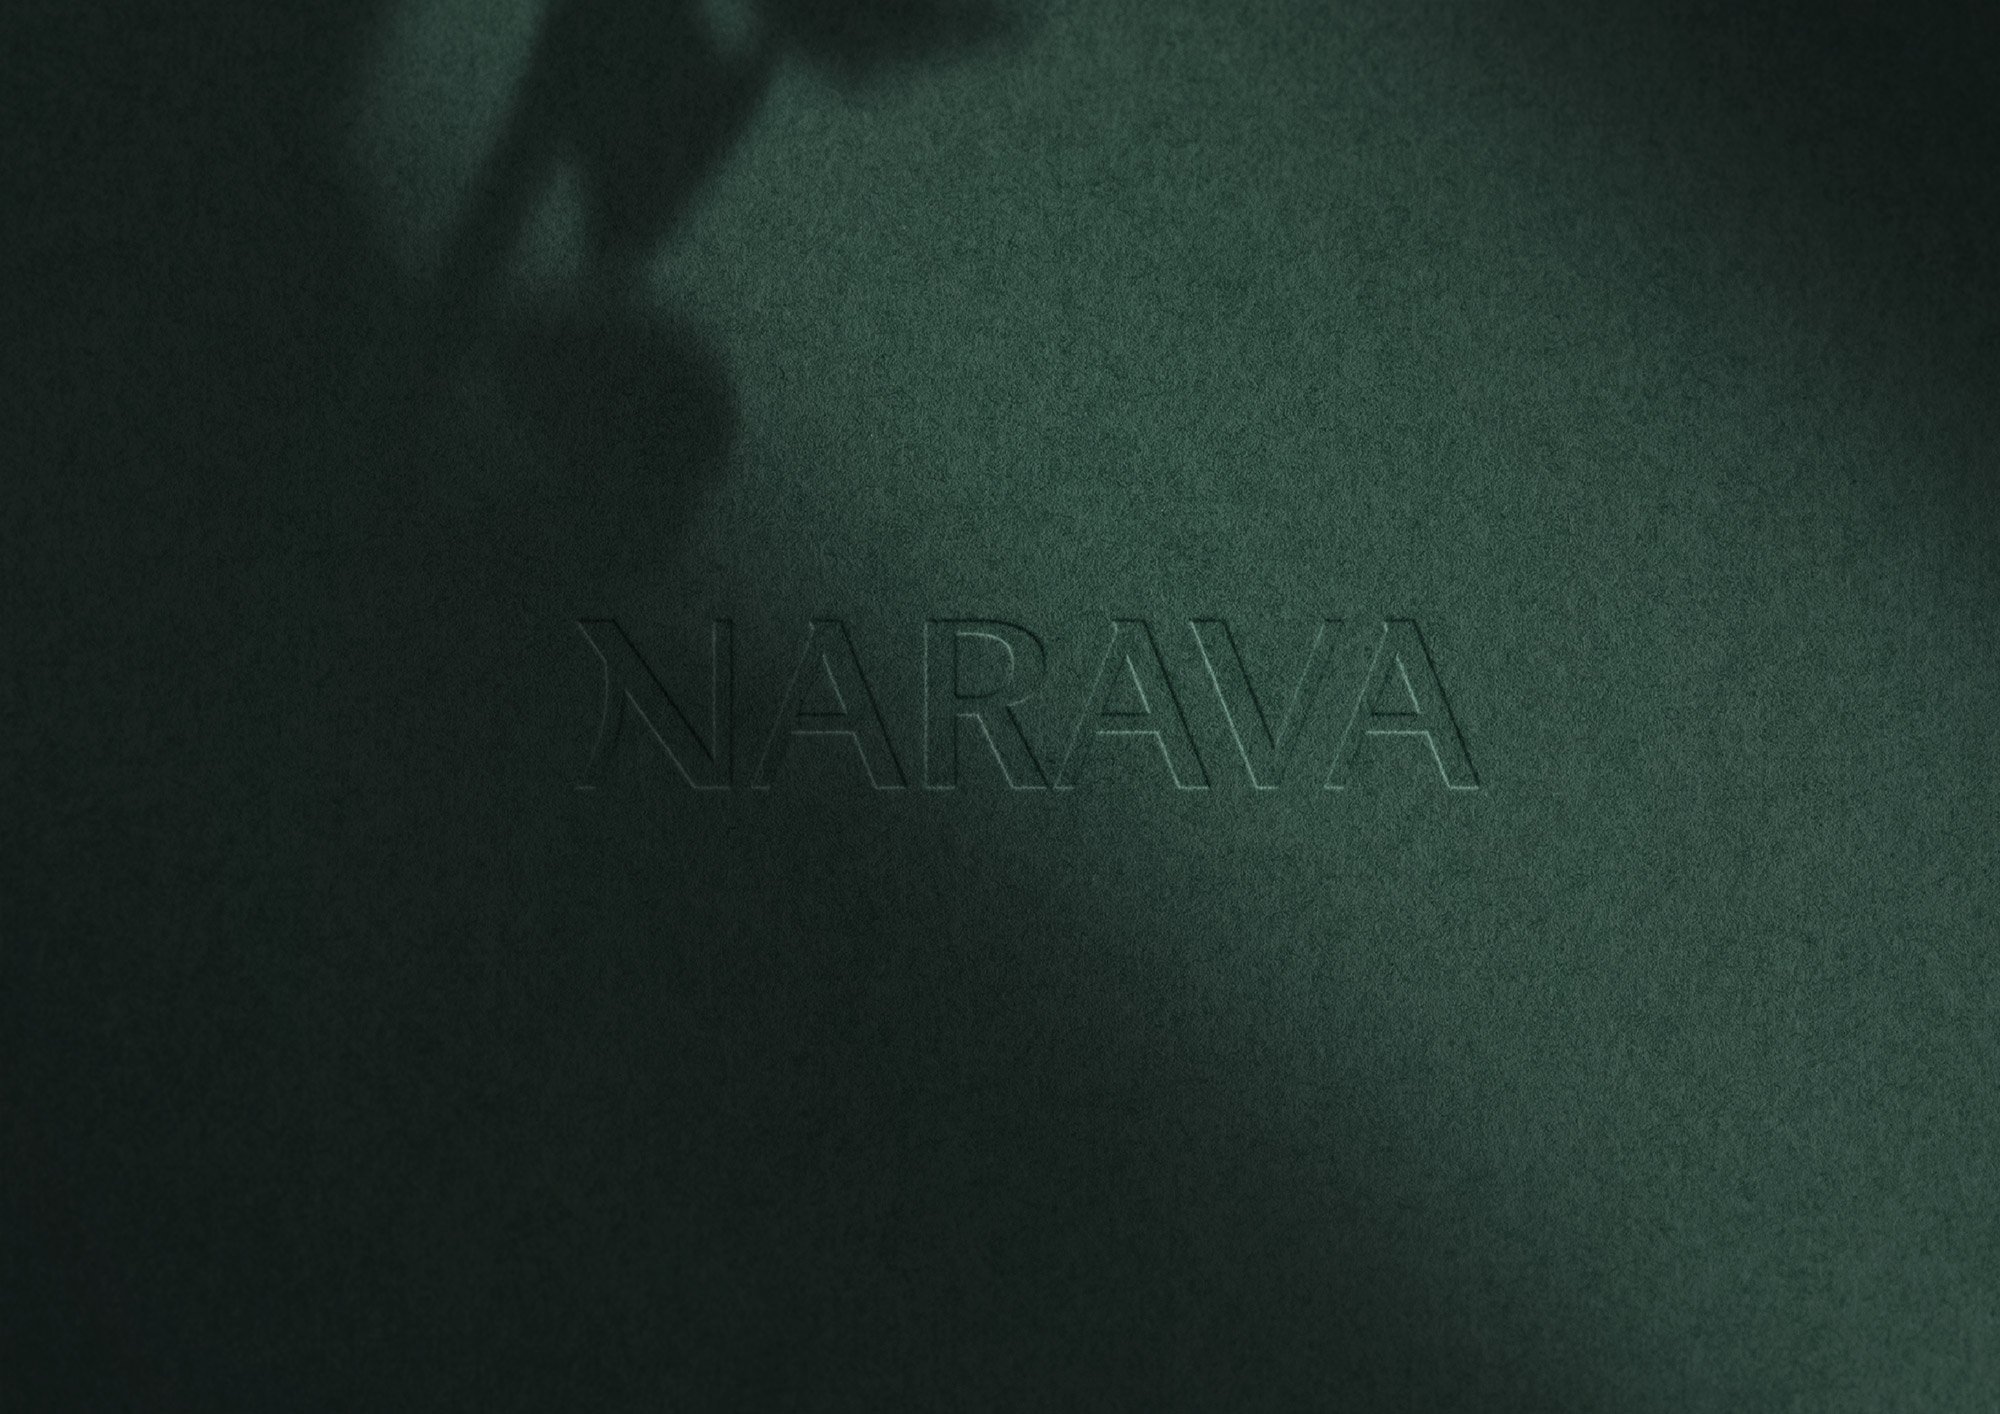 Narava Logo blind deboss into textured paper stock